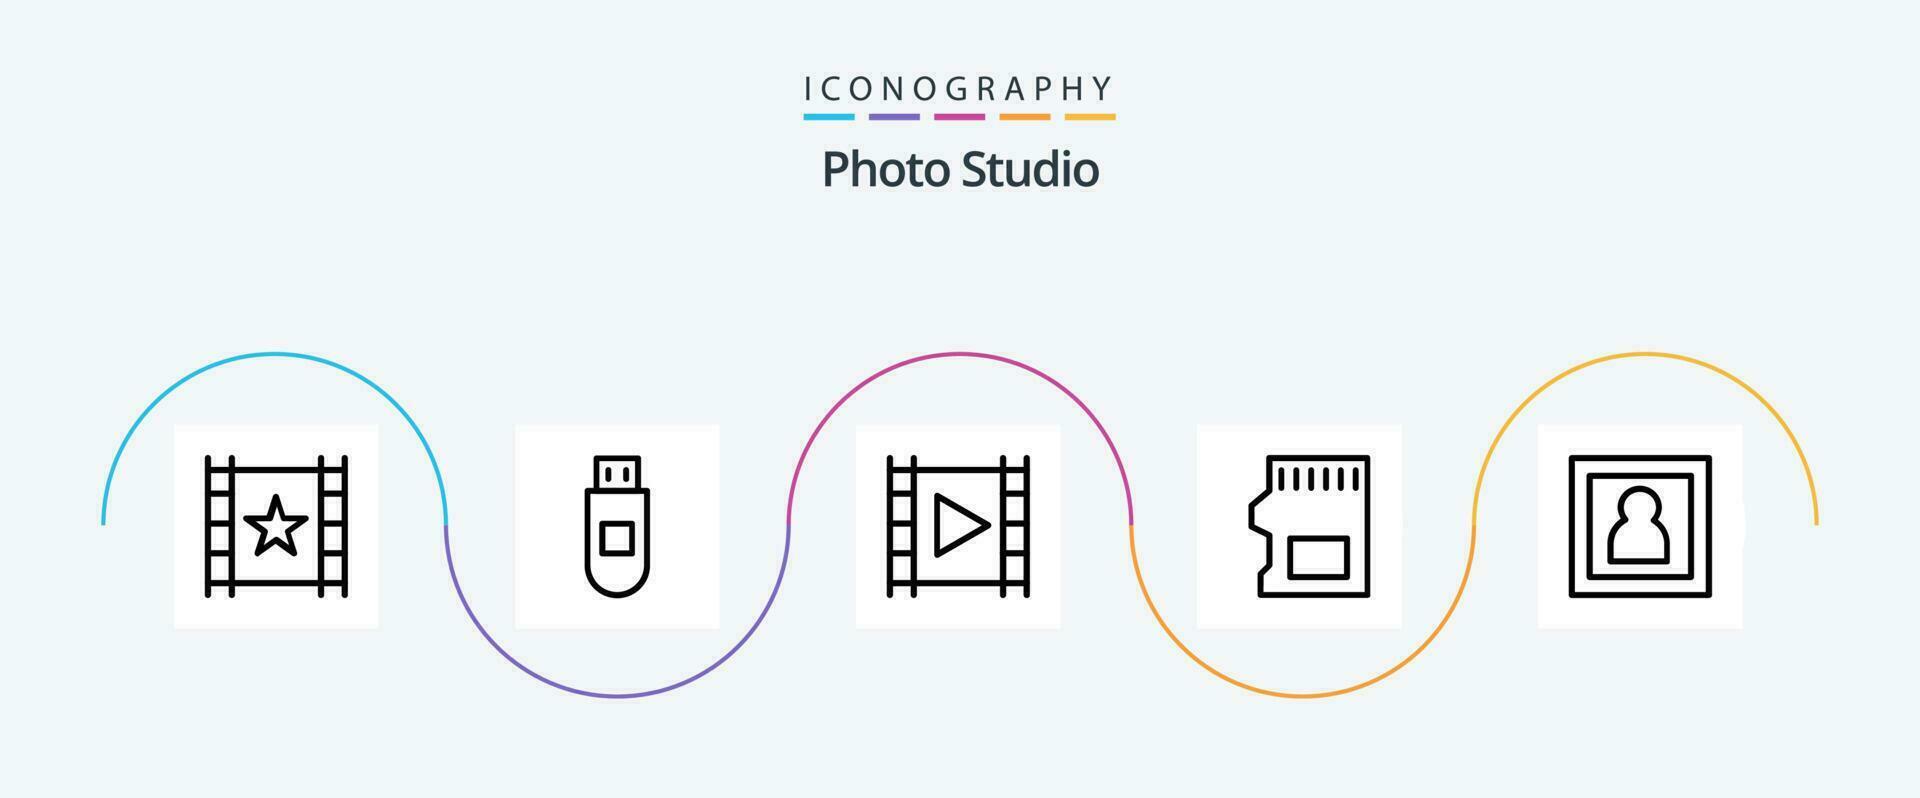 Foto studio linje 5 ikon packa Inklusive fotograf. data. media sid. lagring. sd kort vektor